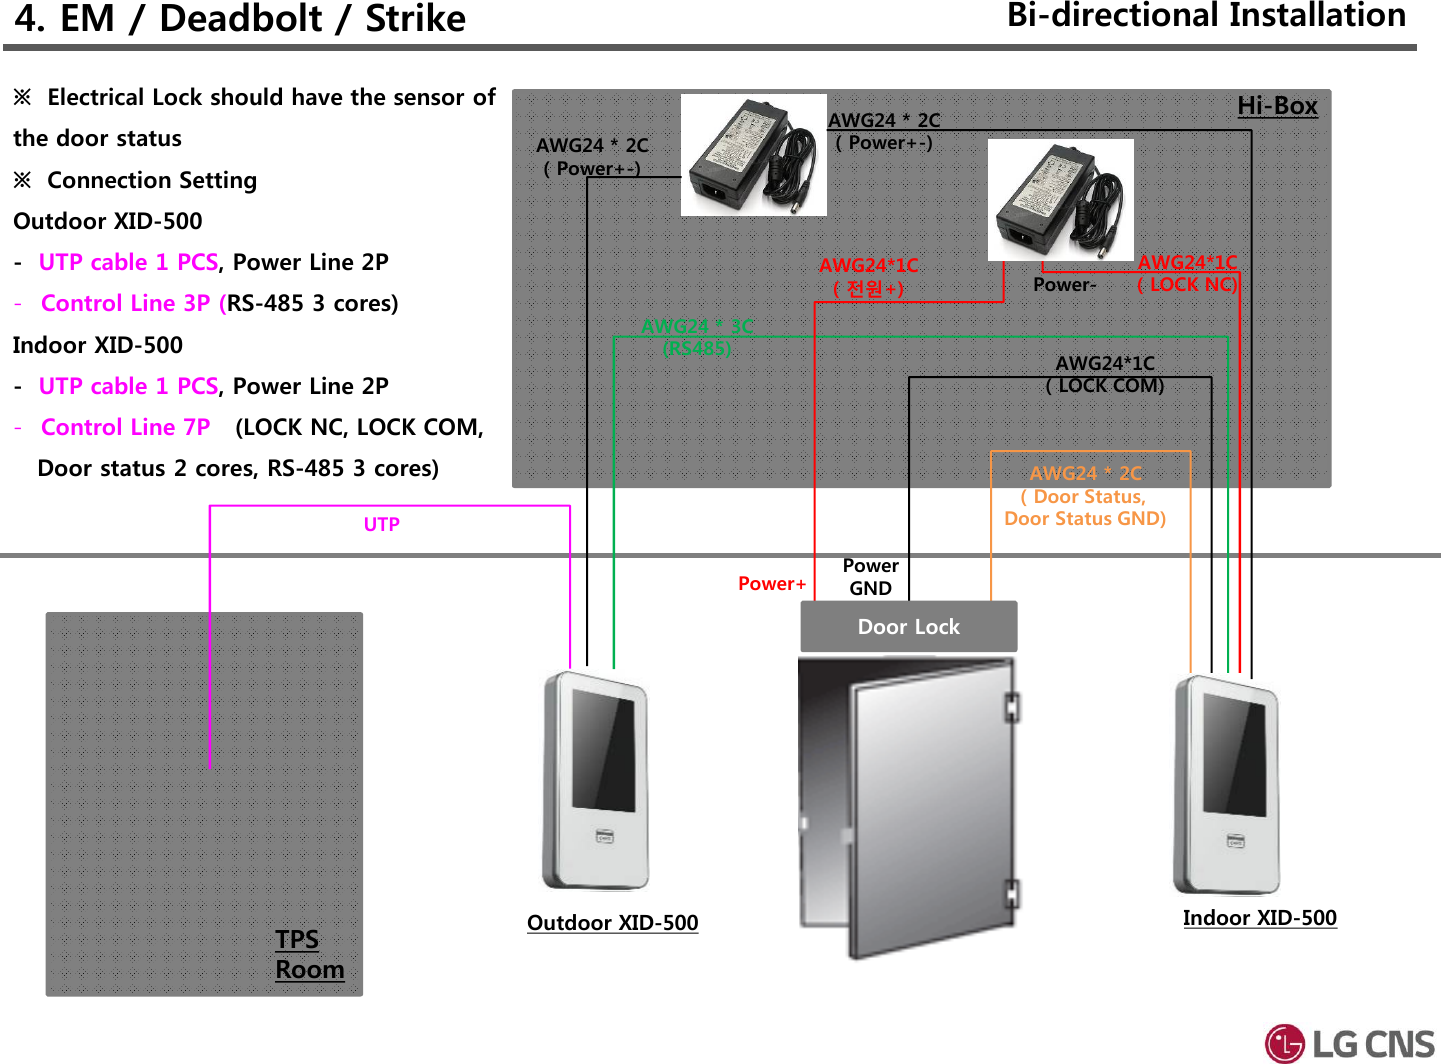 4. EM / Deadbolt / Strike Bi-directional InstallationHi-BoxTPSRoomUTPAWG24*1C( LOCK NC)AWG24 * 2C( Door Status, Door Status GND)AWG24 * 3C(RS485)AWG24 * 2C( Power+-)AWG24*1C( LOCK COM)AWG24*1C( 전원+)Power+ PowerGNDPower-Outdoor XID-500 Indoor XID-500AWG24 * 2C( Power+-)Door Lock※  Electrical Lock should have the sensor of the door status※  Connection SettingOutdoor XID-500 -UTP cable 1 PCS, Power Line 2P -Control Line 3P (RS-485 3 cores)Indoor XID-500-UTP cable 1 PCS, Power Line 2P -Control Line 7P  (LOCK NC, LOCK COM, Door status 2 cores, RS-485 3 cores)